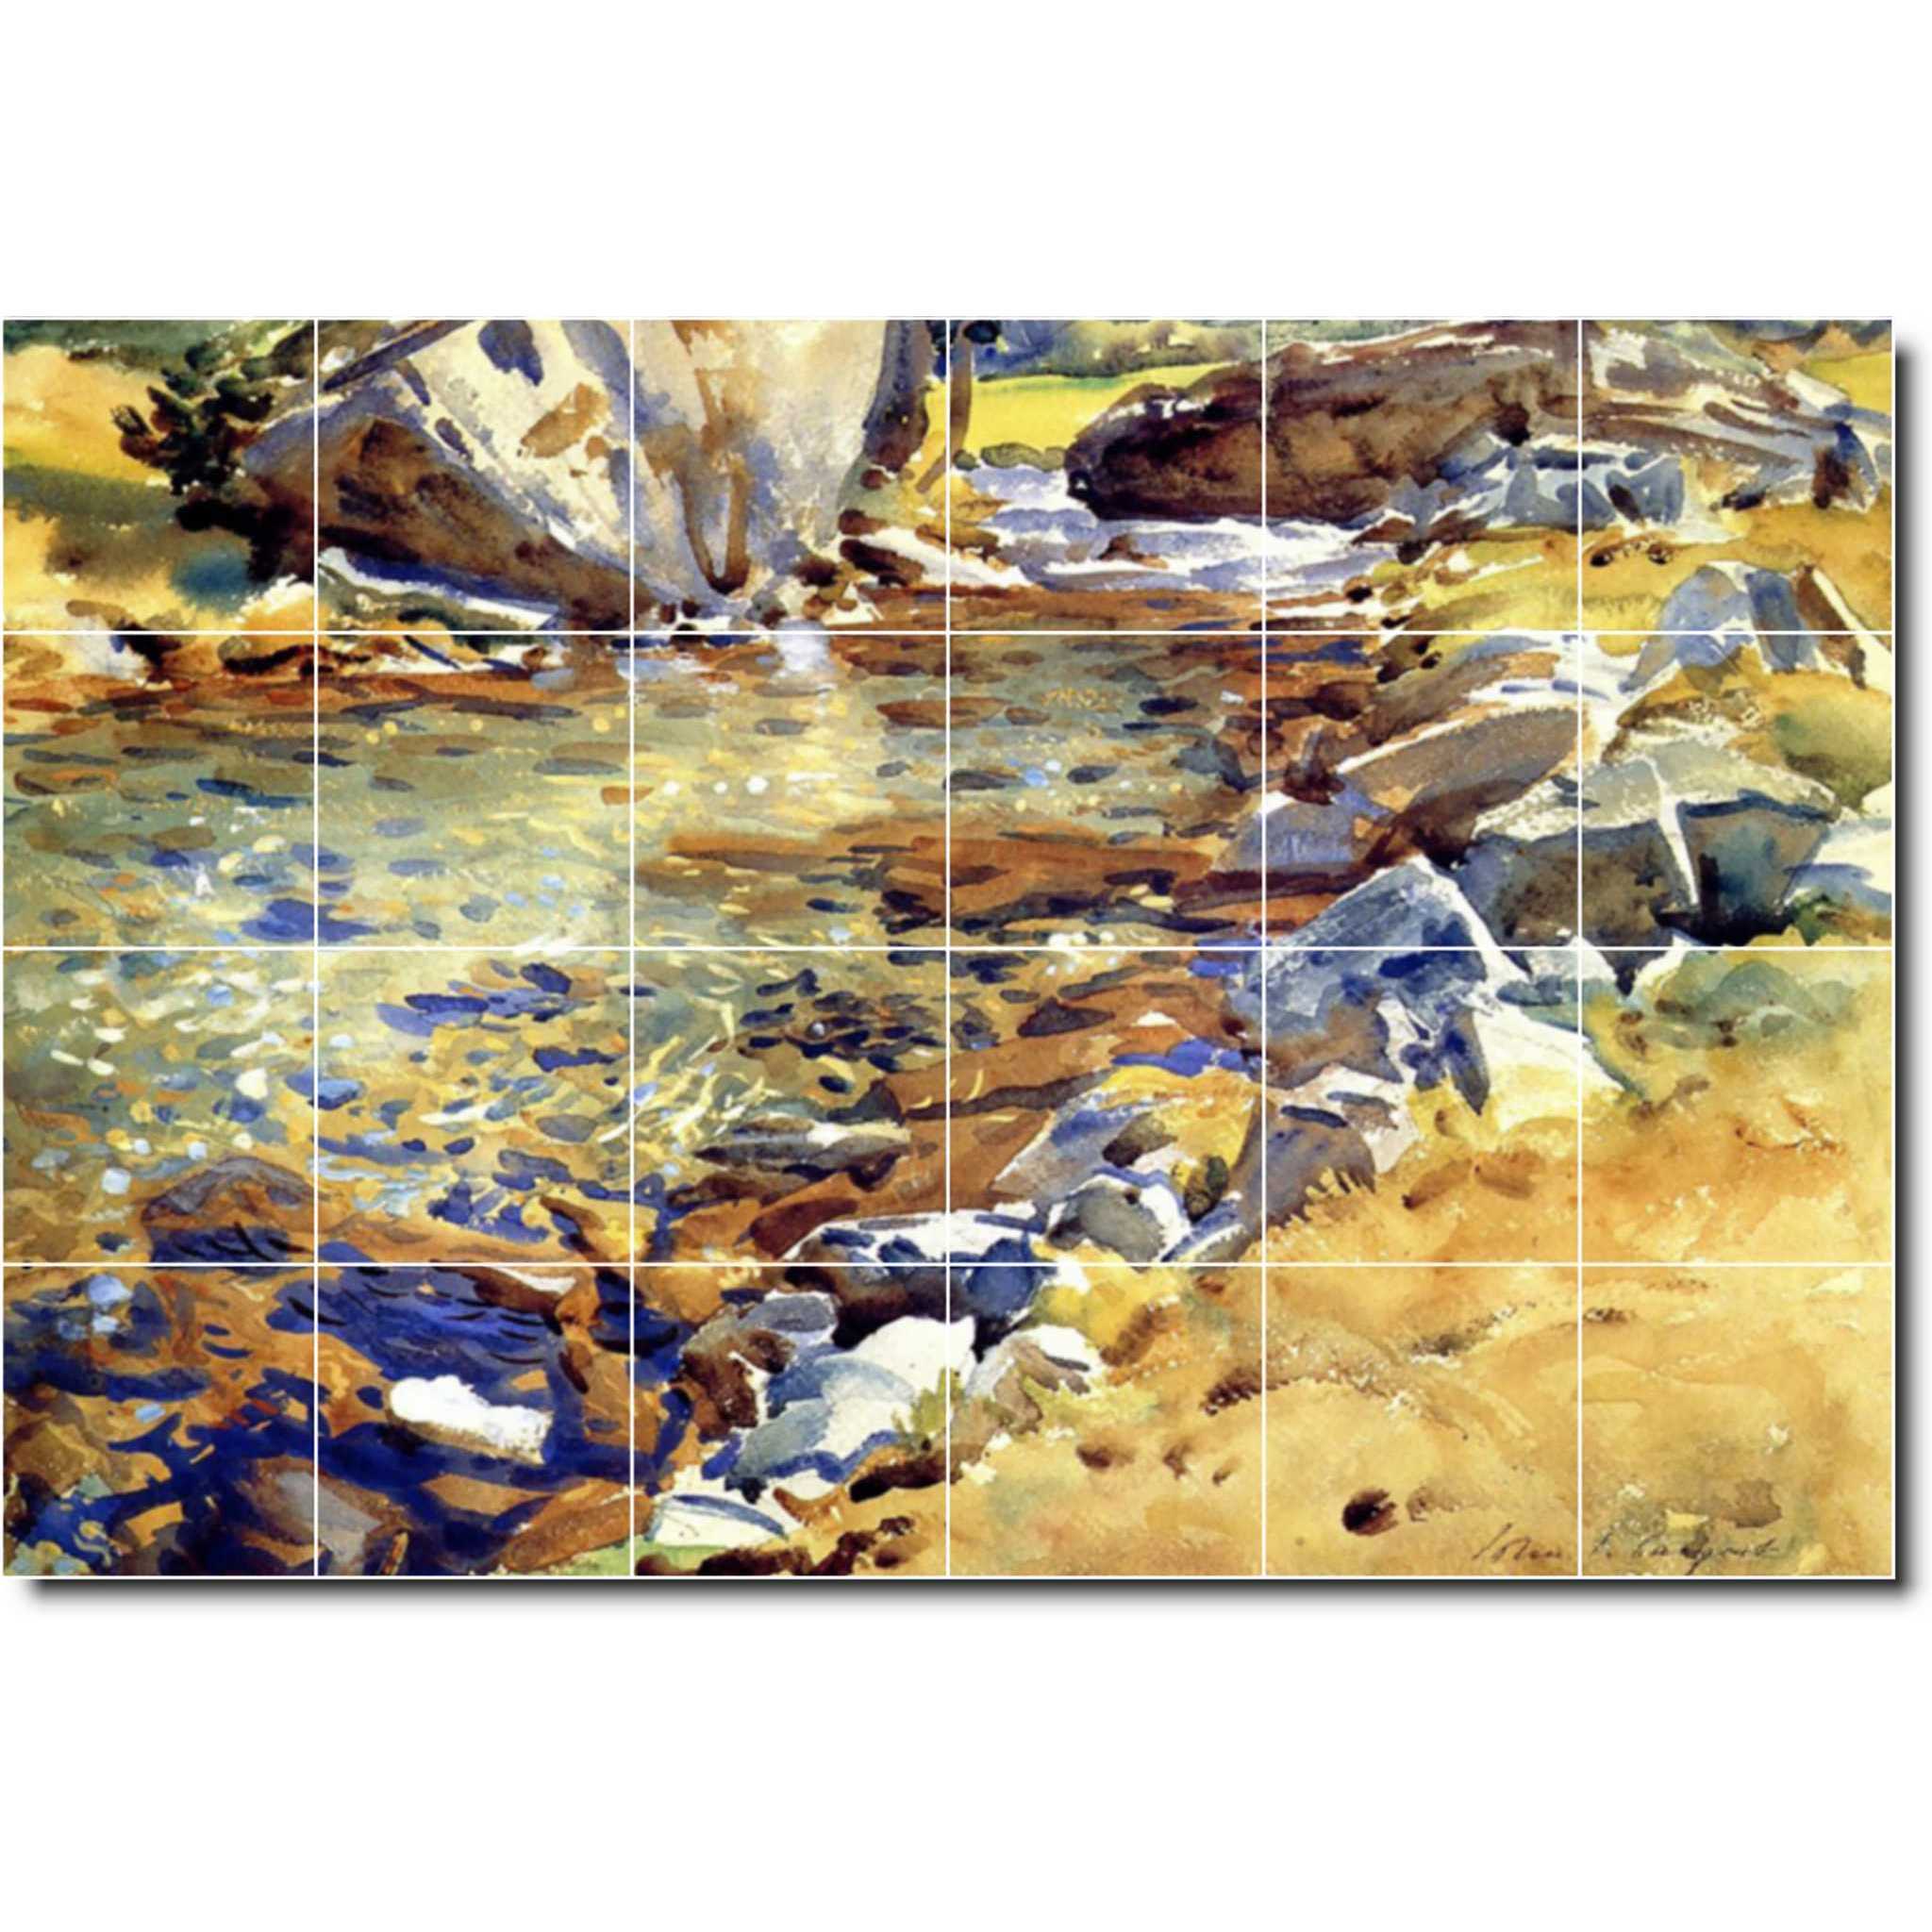 john sargent landscape painting ceramic tile mural p07903